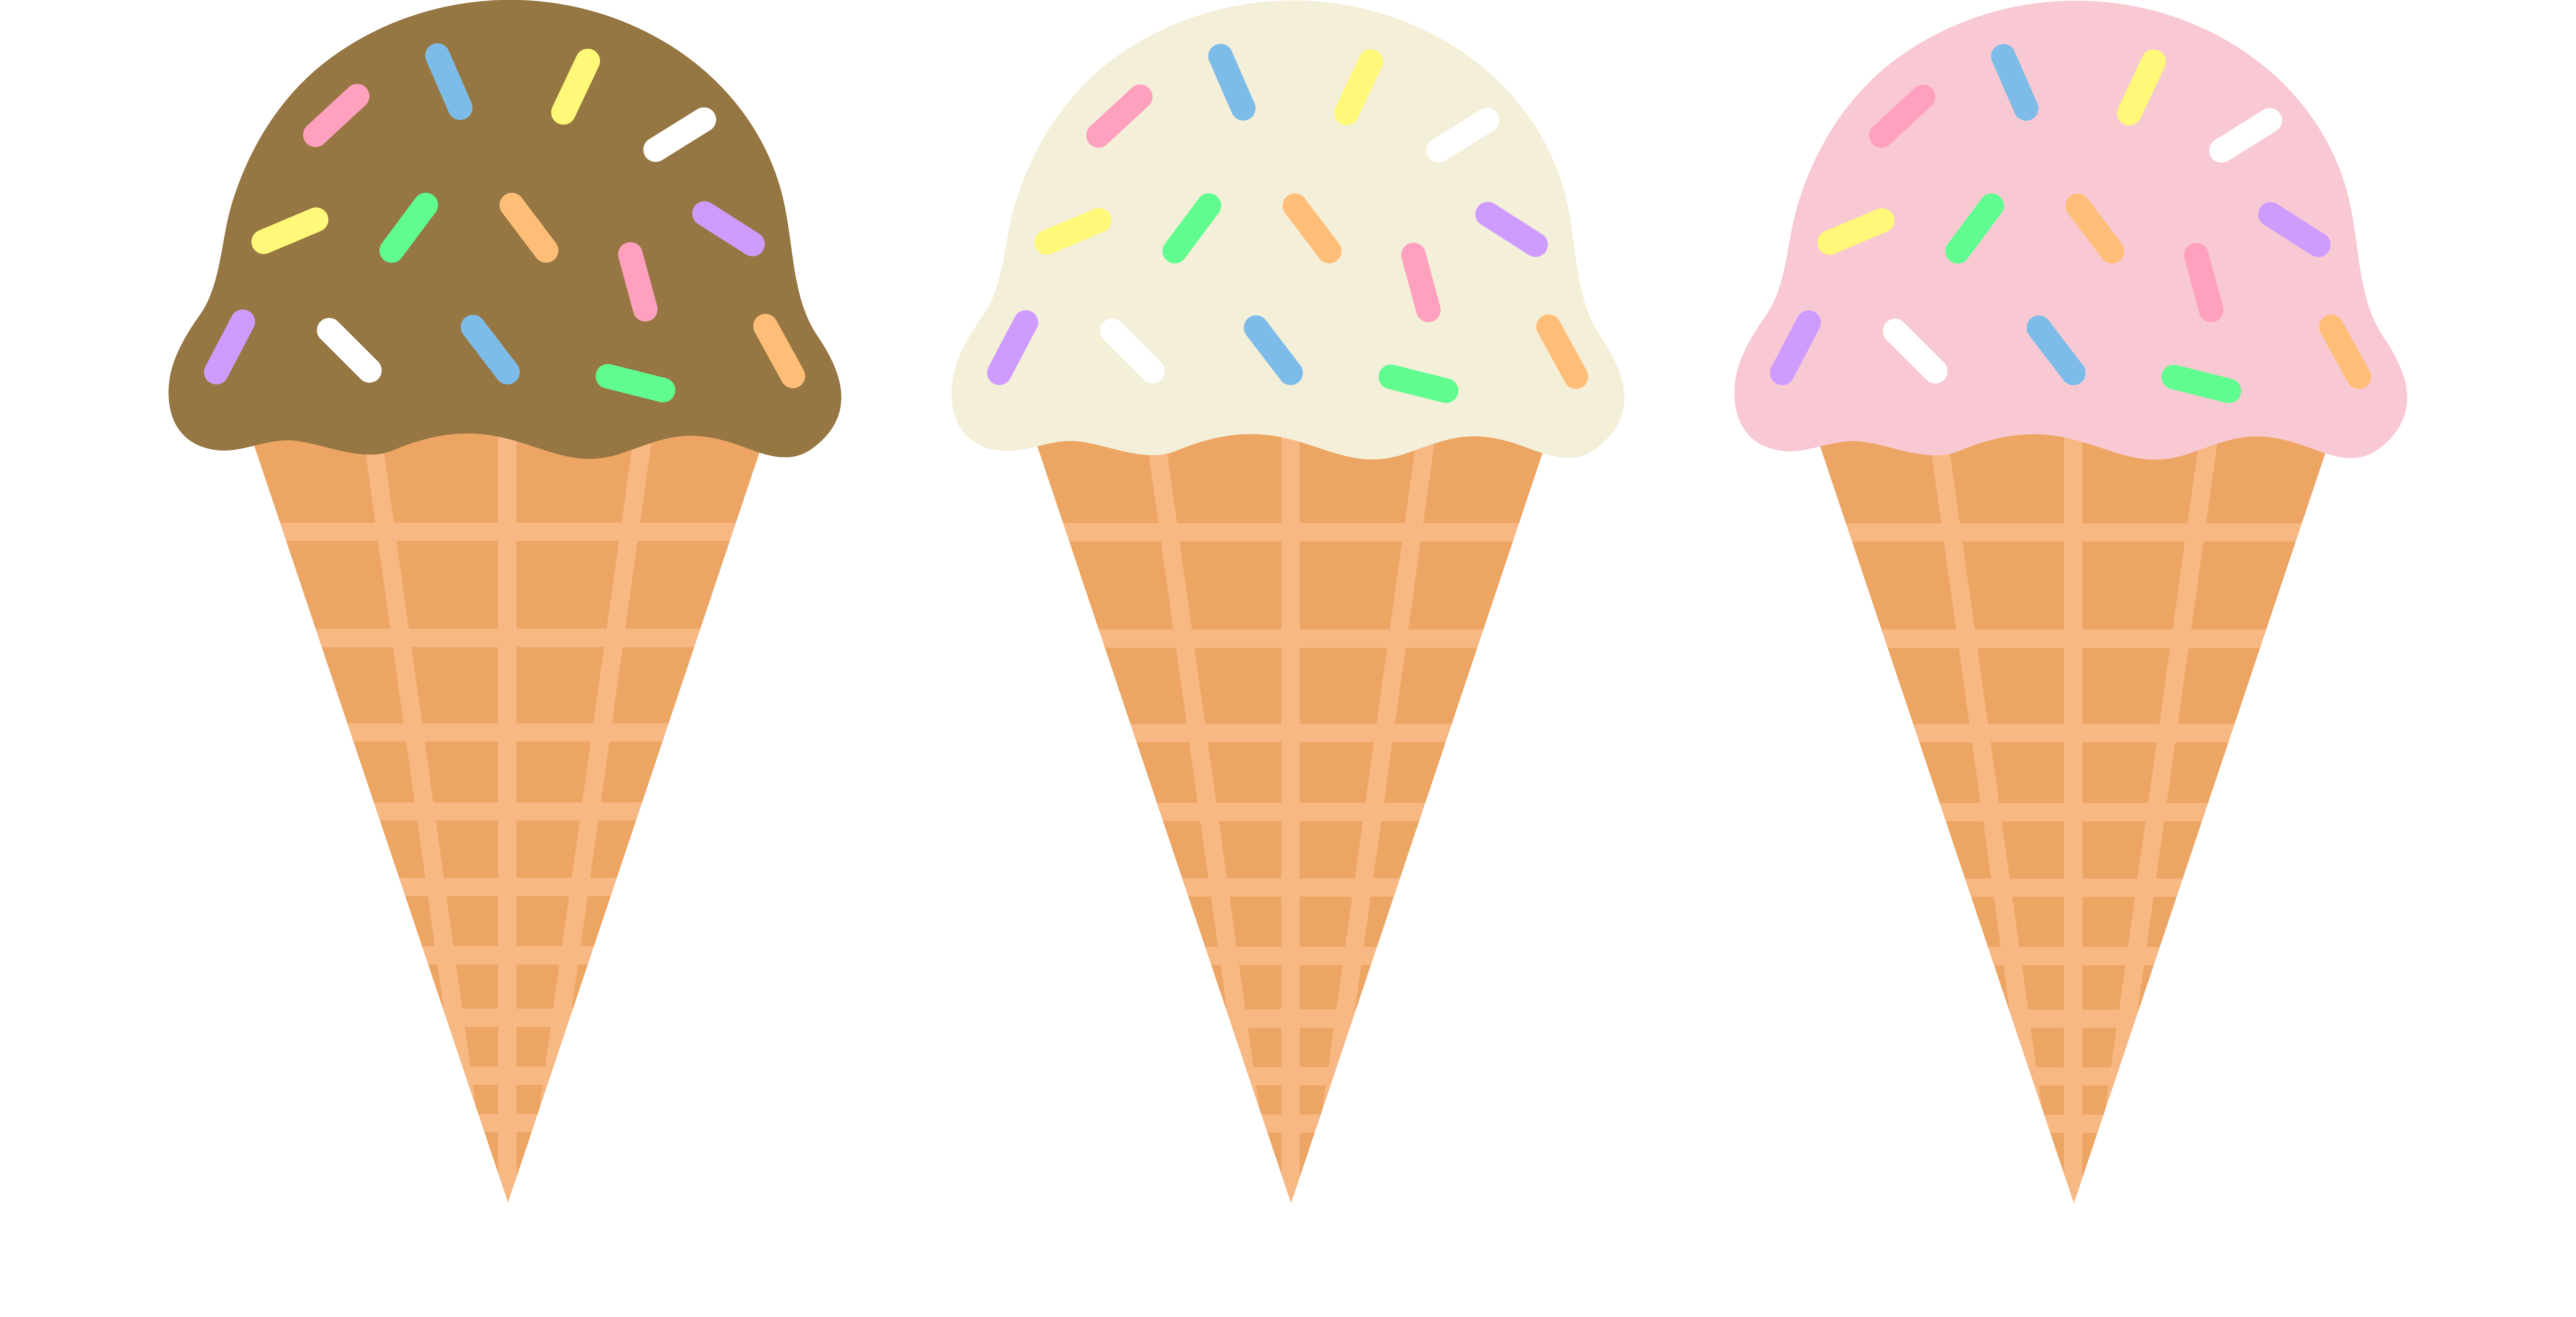 Free Images Of Ice Cream Cones Download Free Images Of Ice Cream Cones